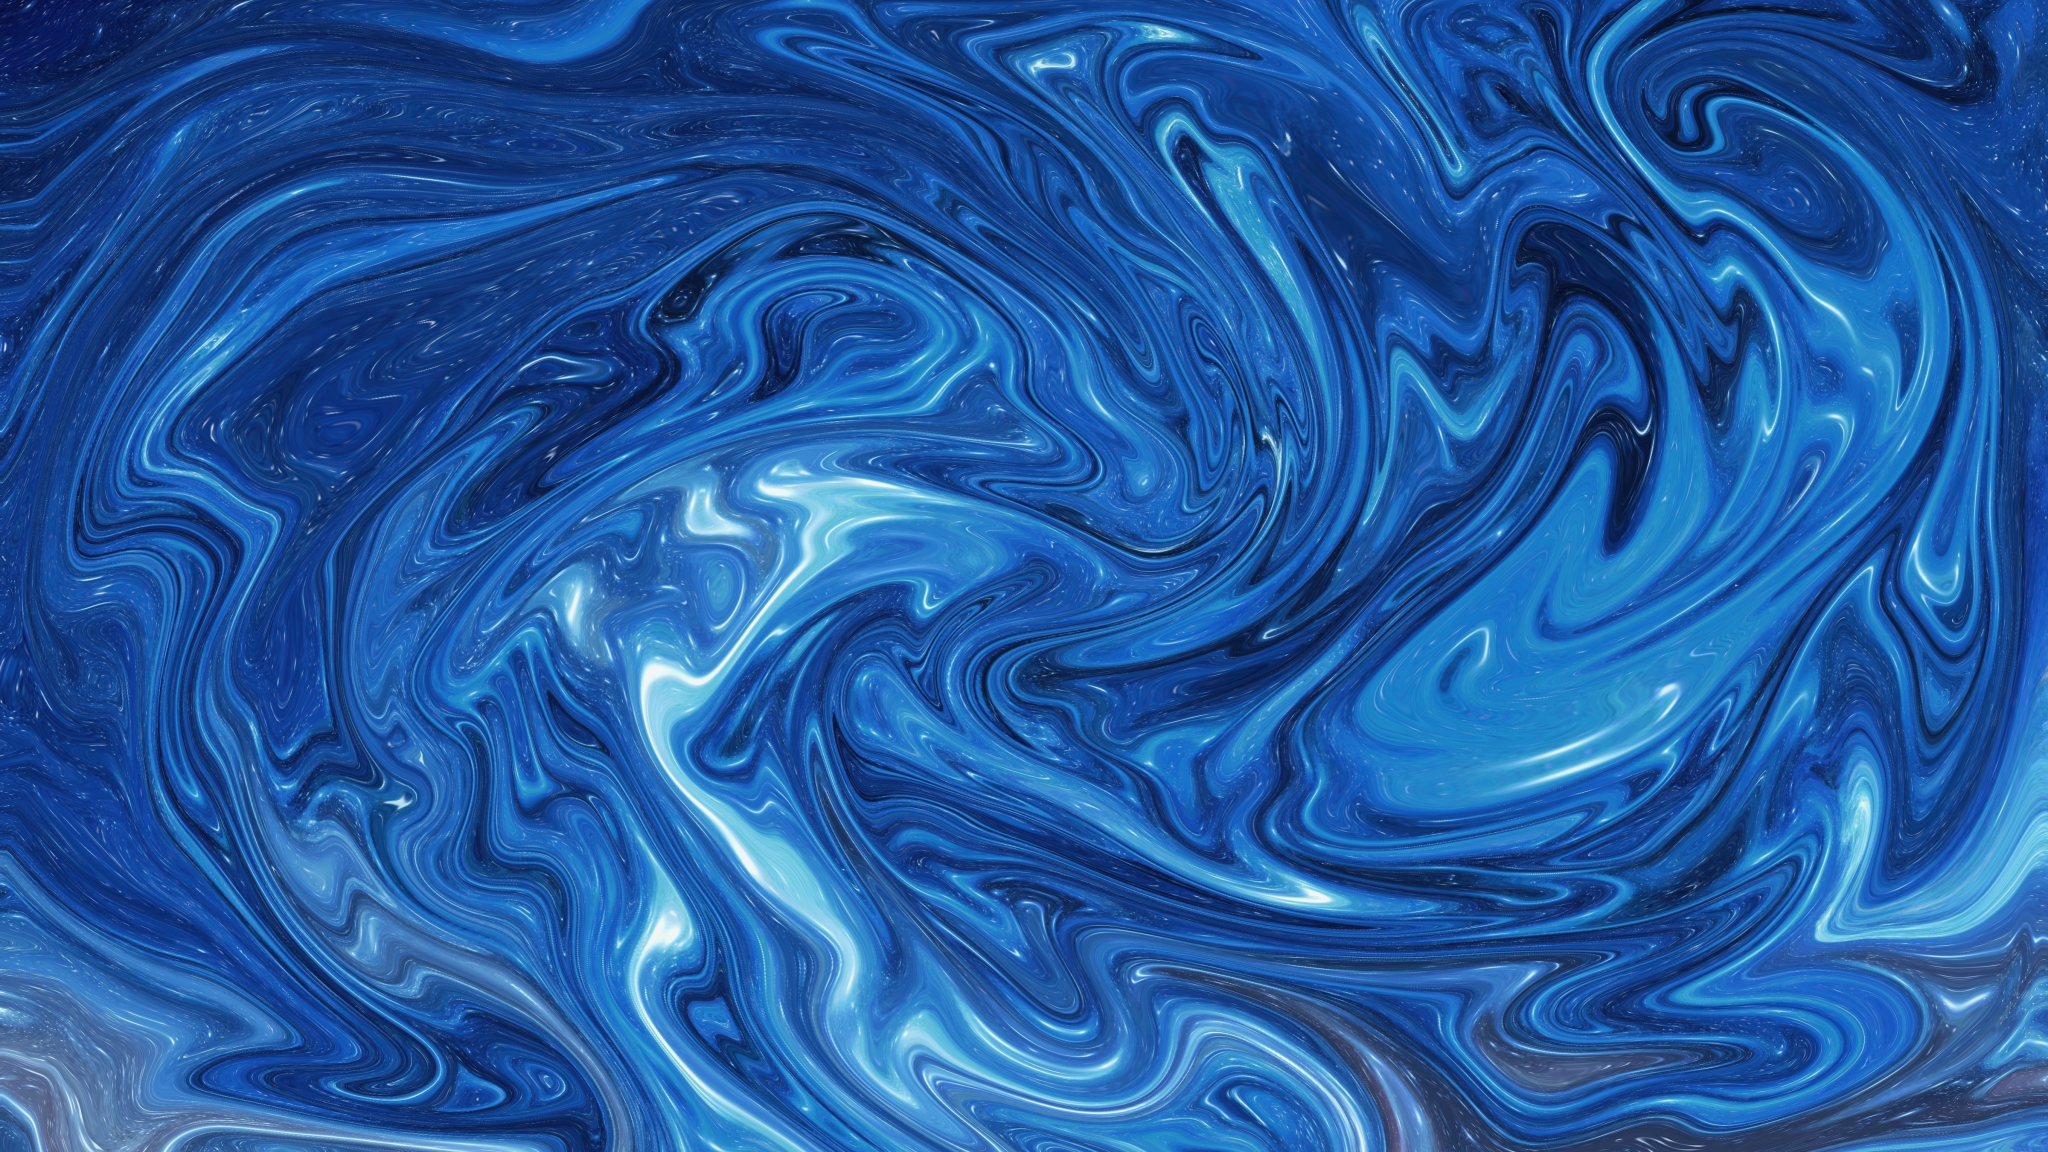 Download wallpaper 2048x1152 abstract, blue liquid mixture, pattern, dual wide 2048x1152 hd